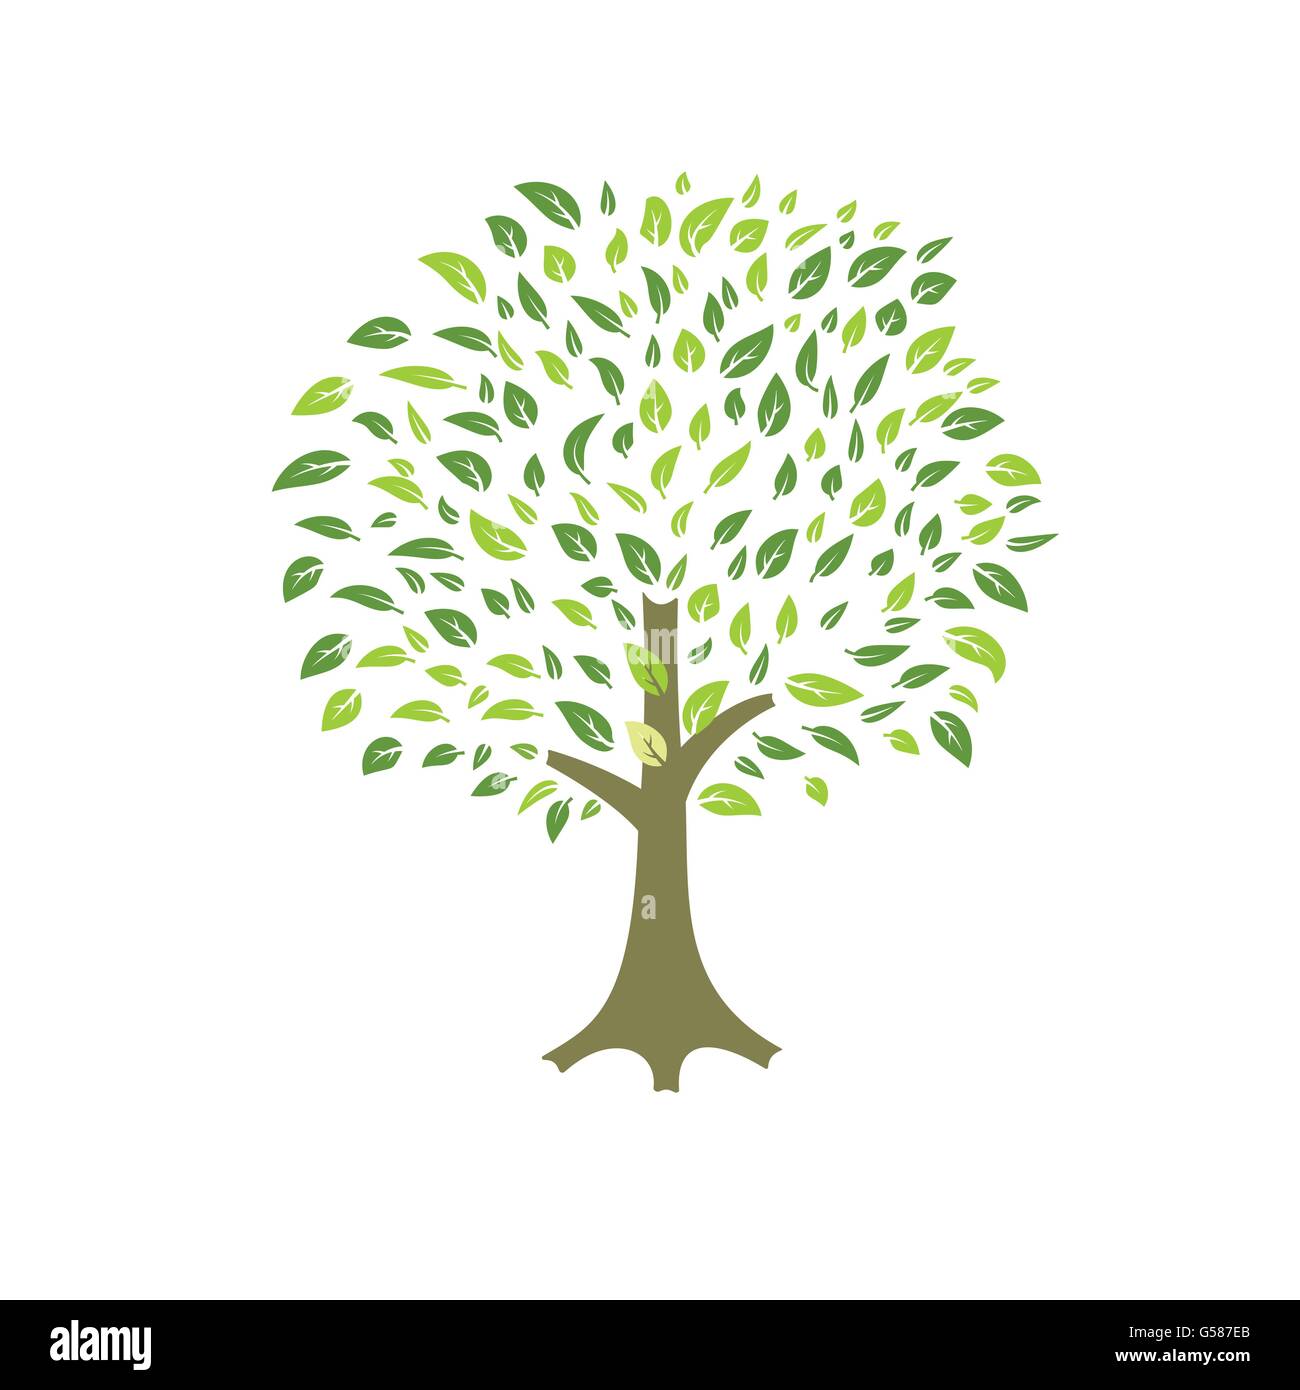 Sommer Saison Baum mit grünen Blättern Vektorgrafik Eco Umwelt Stock Vektor